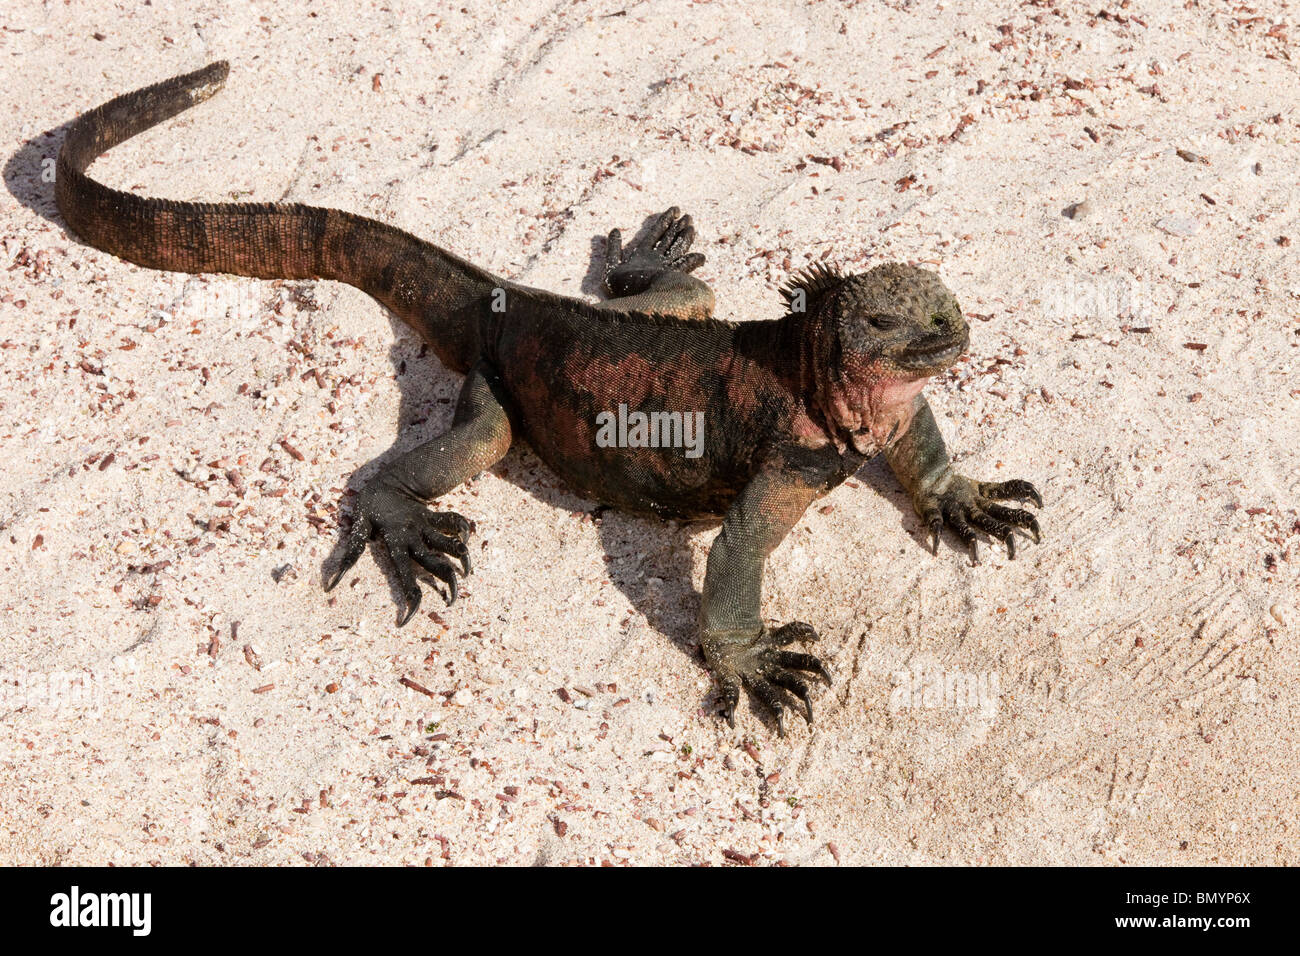 A Marine Iguana sleeping on a beach on Espanola Island in the Galapagos Islands Stock Photo